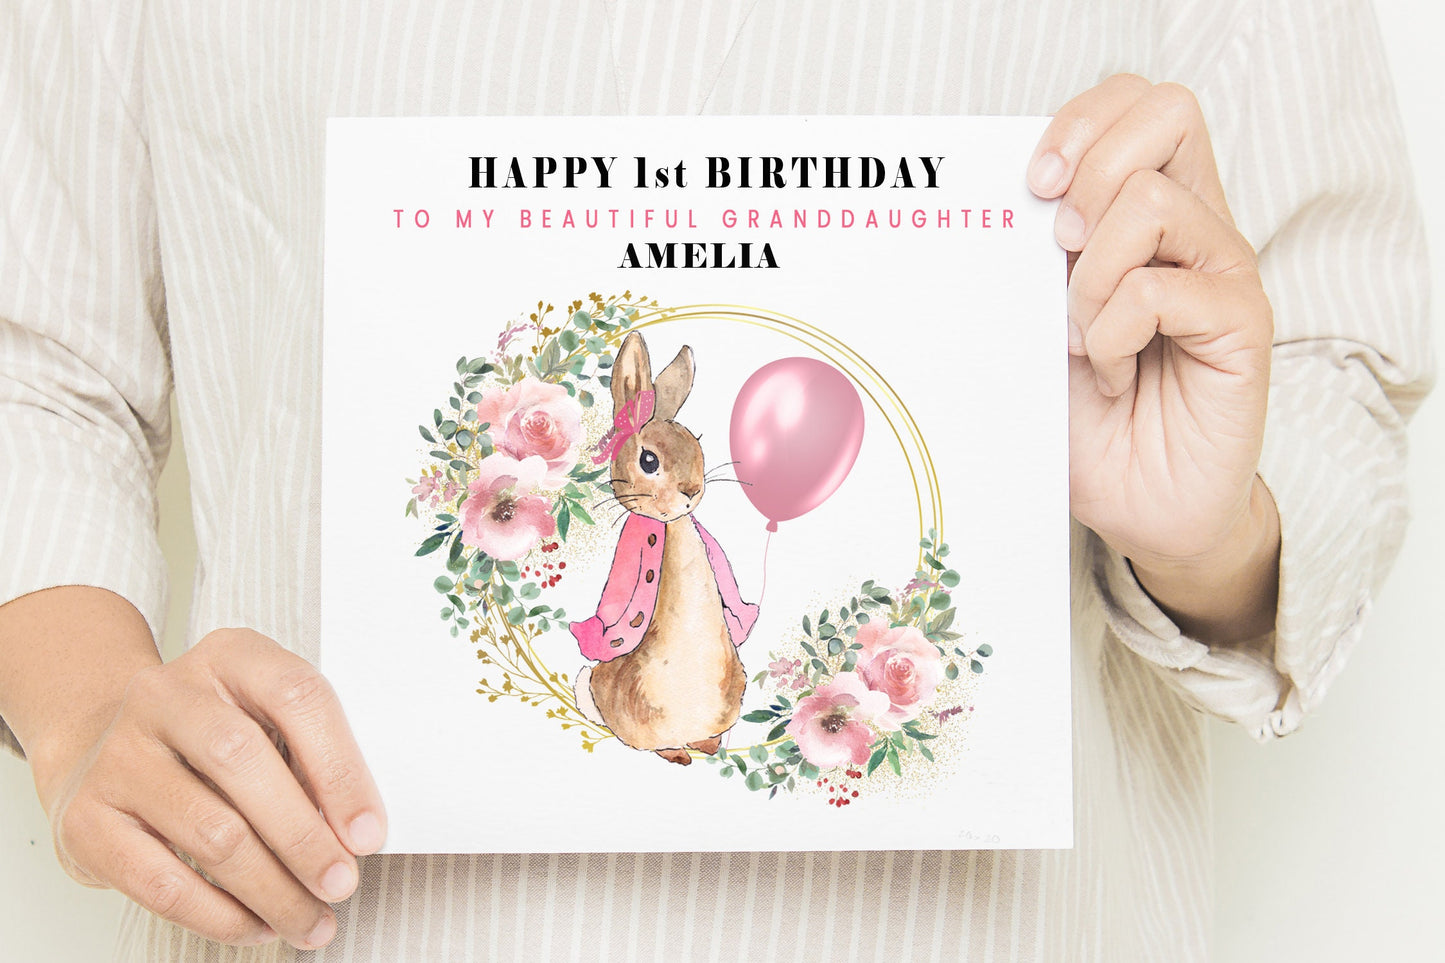 Granddaughter Peter Rabbit 1st Birthday Card